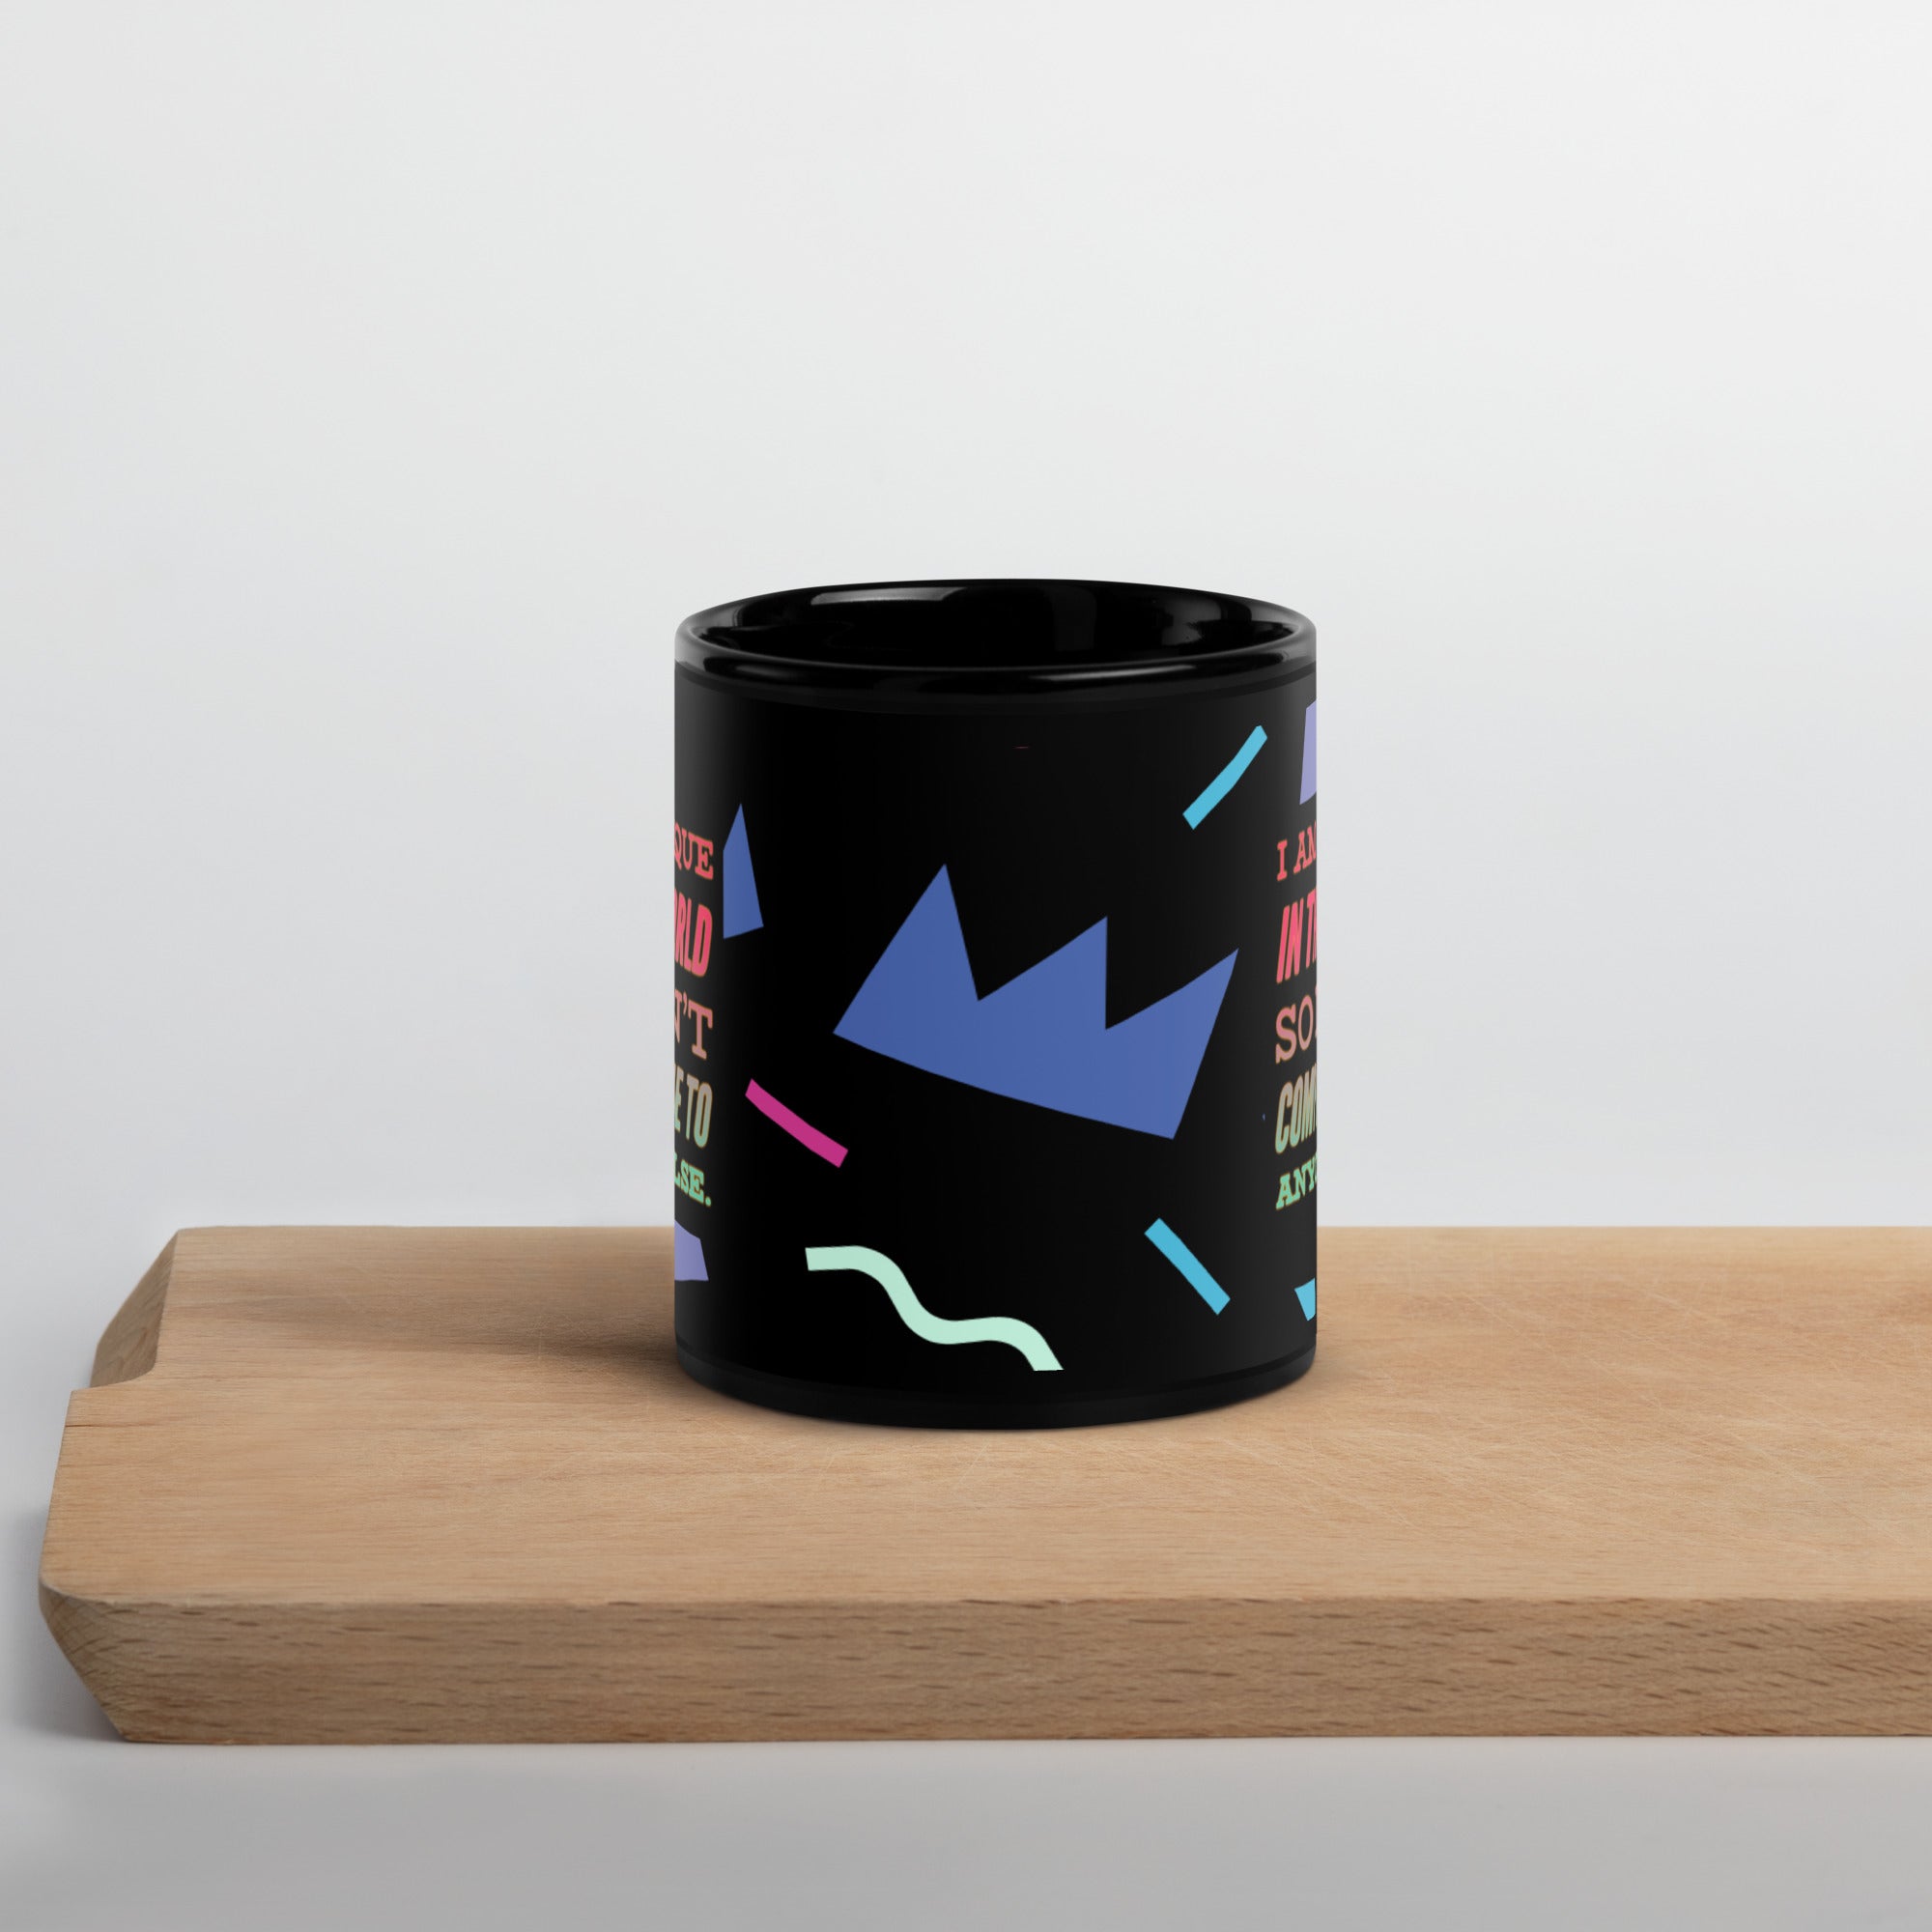 GloWell Designs - Black Glossy Mug - Affirmation Quote - I Am Unique - GloWell Designs